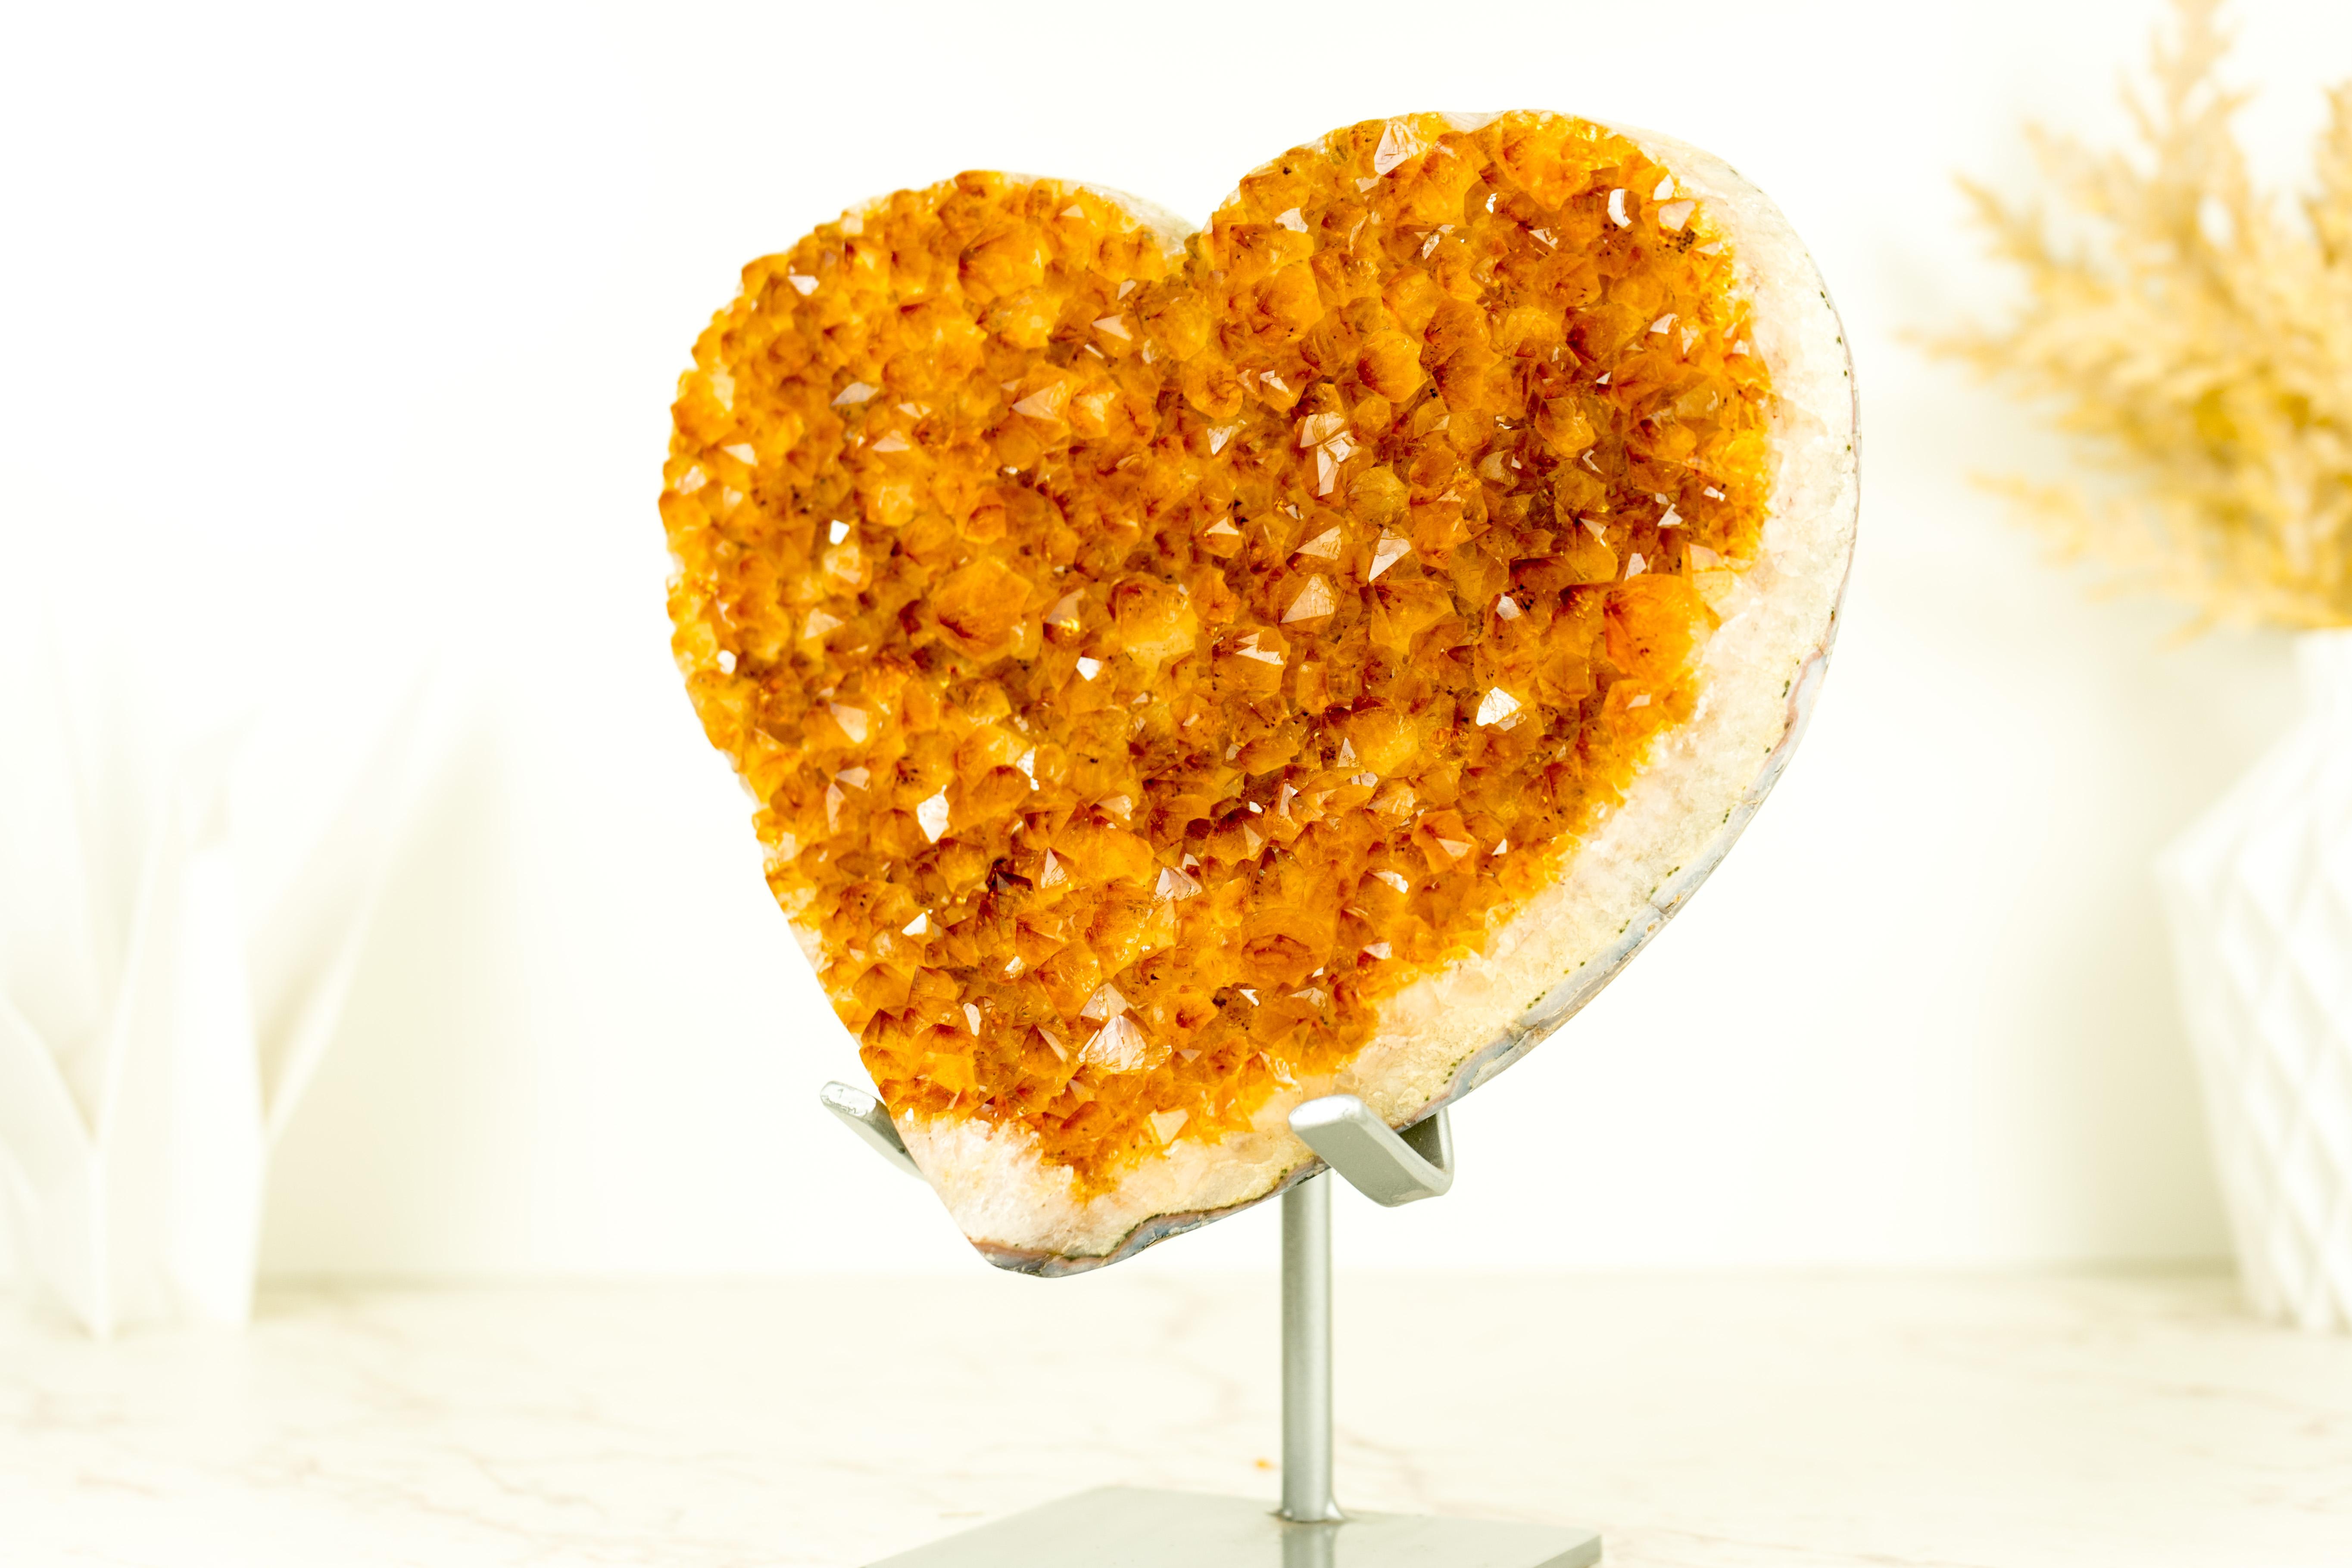 Crystal Citrine Heart Sculpture with Deep Orange, Shiny High-Grade Citrine Druzy For Sale 1